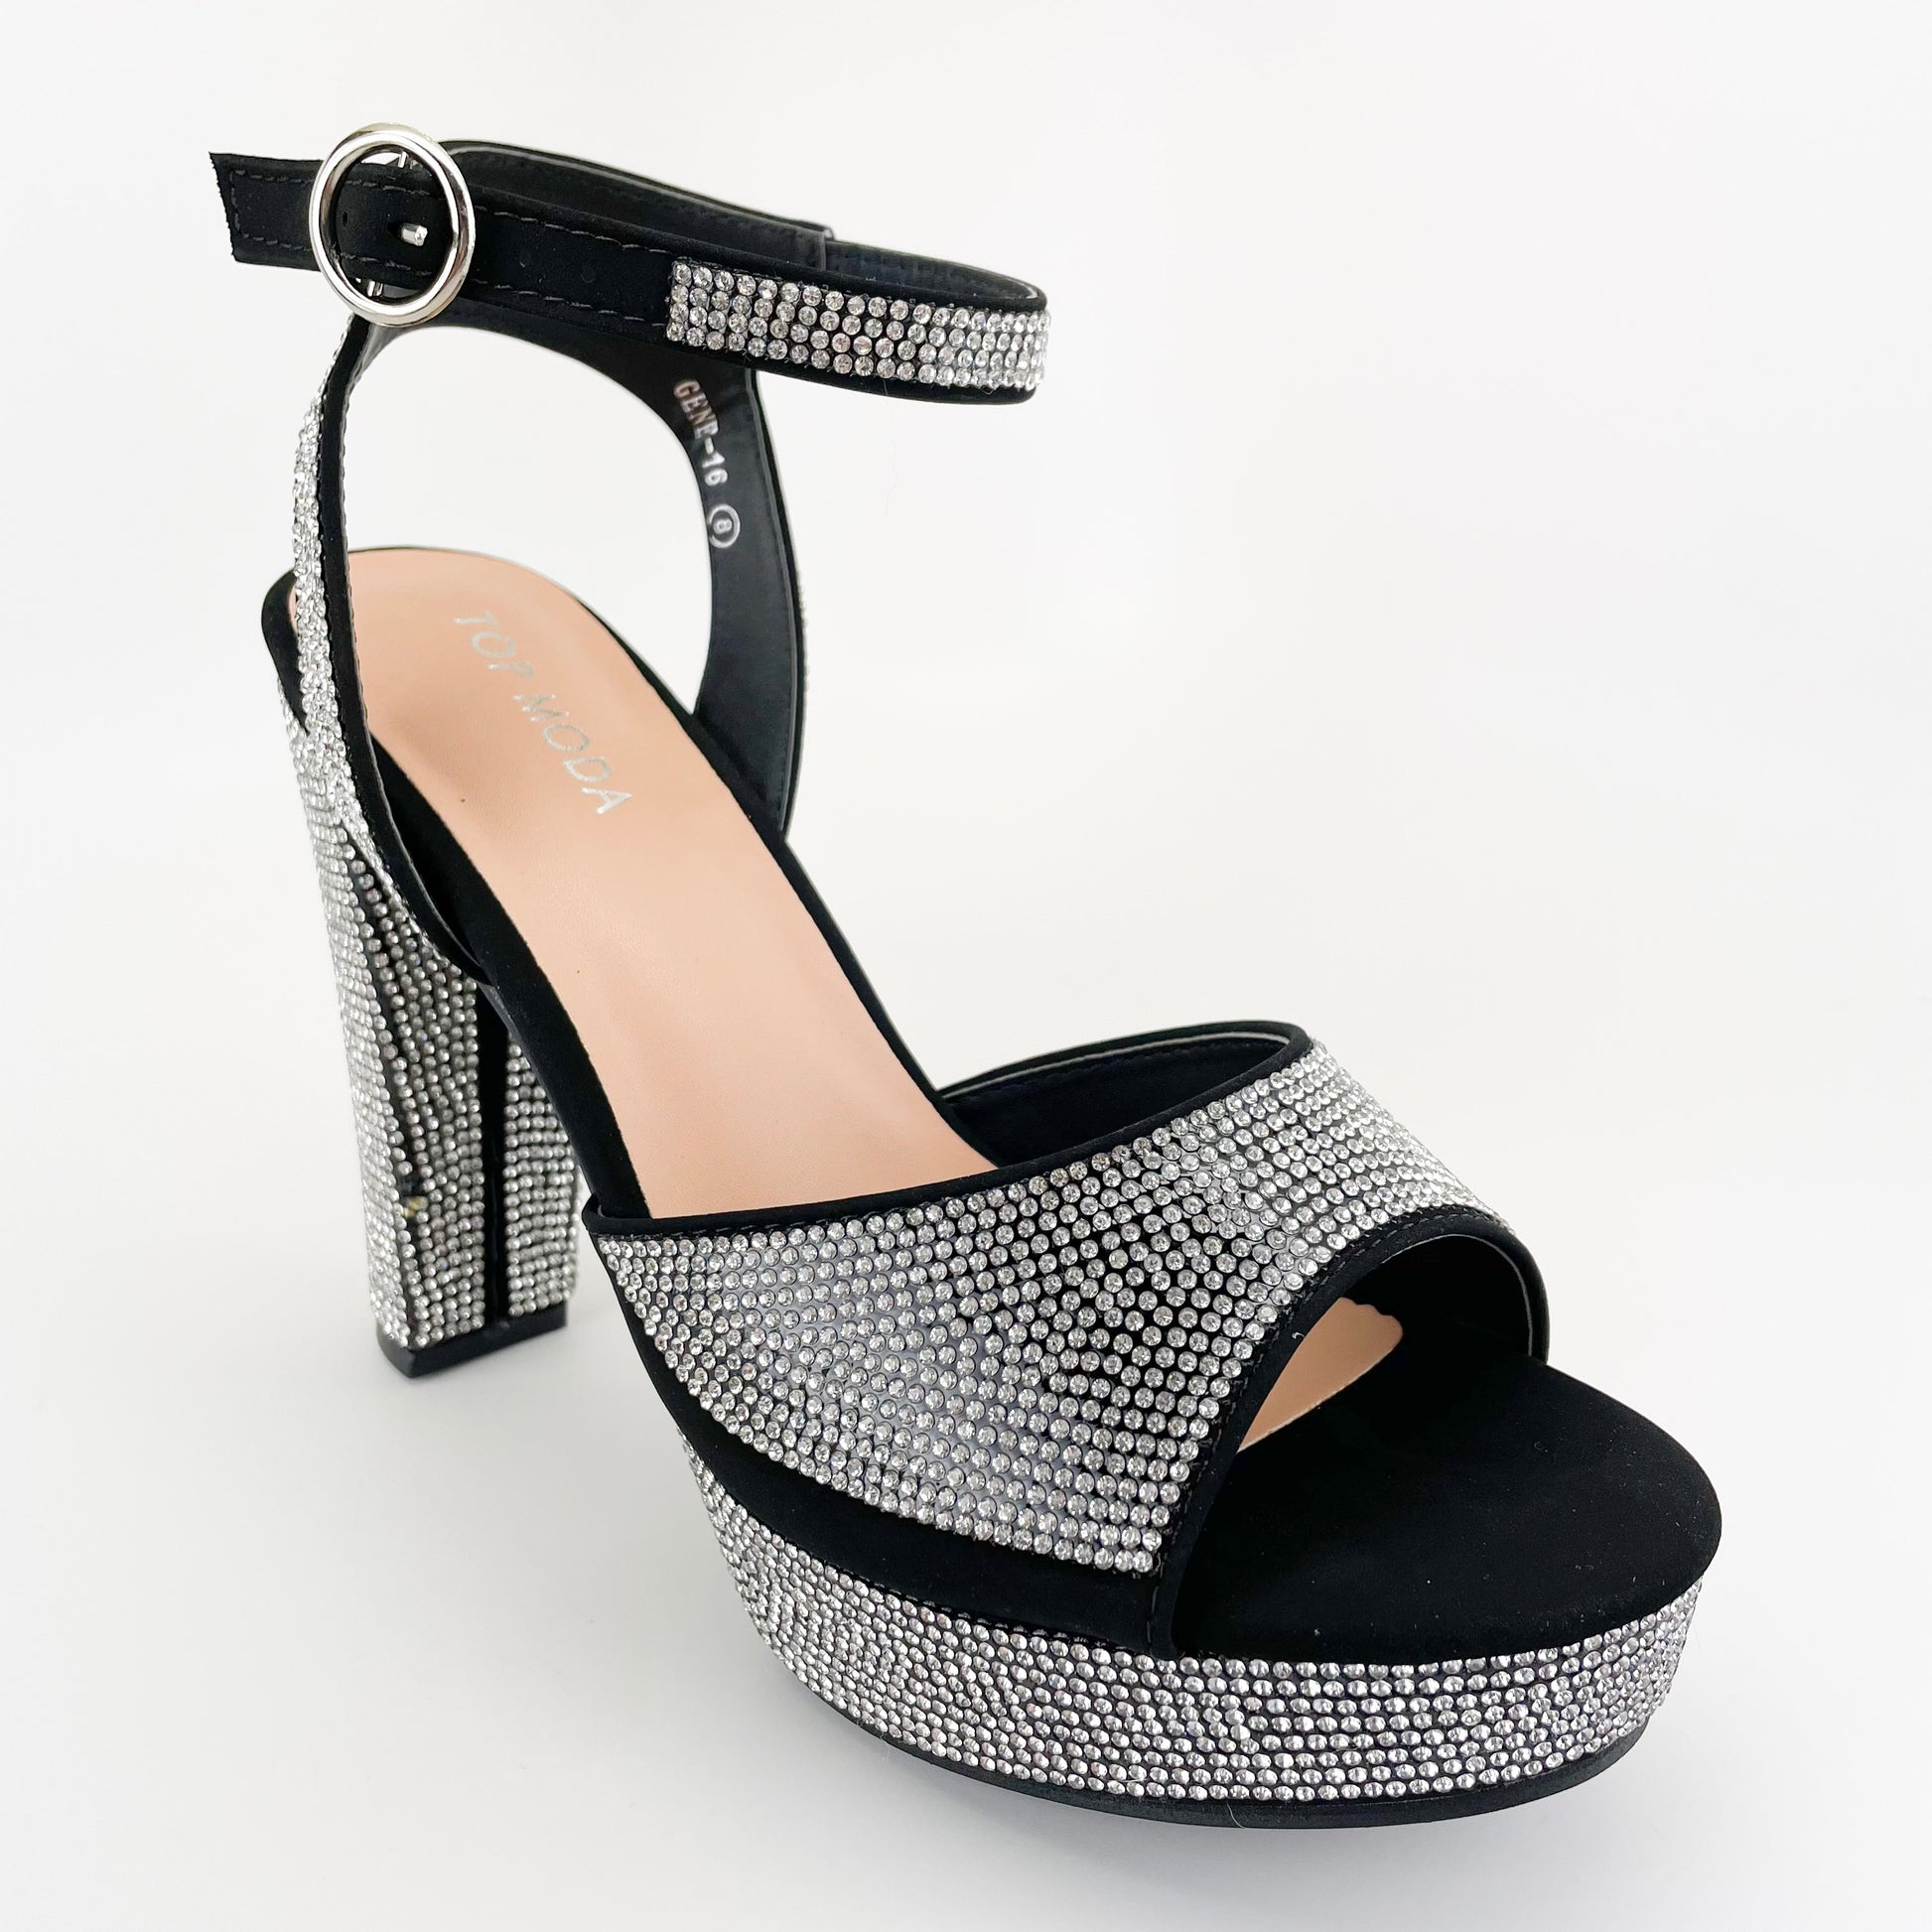 top moda gene-16 black platform heels with rhinestones shoe dazzle wedding party